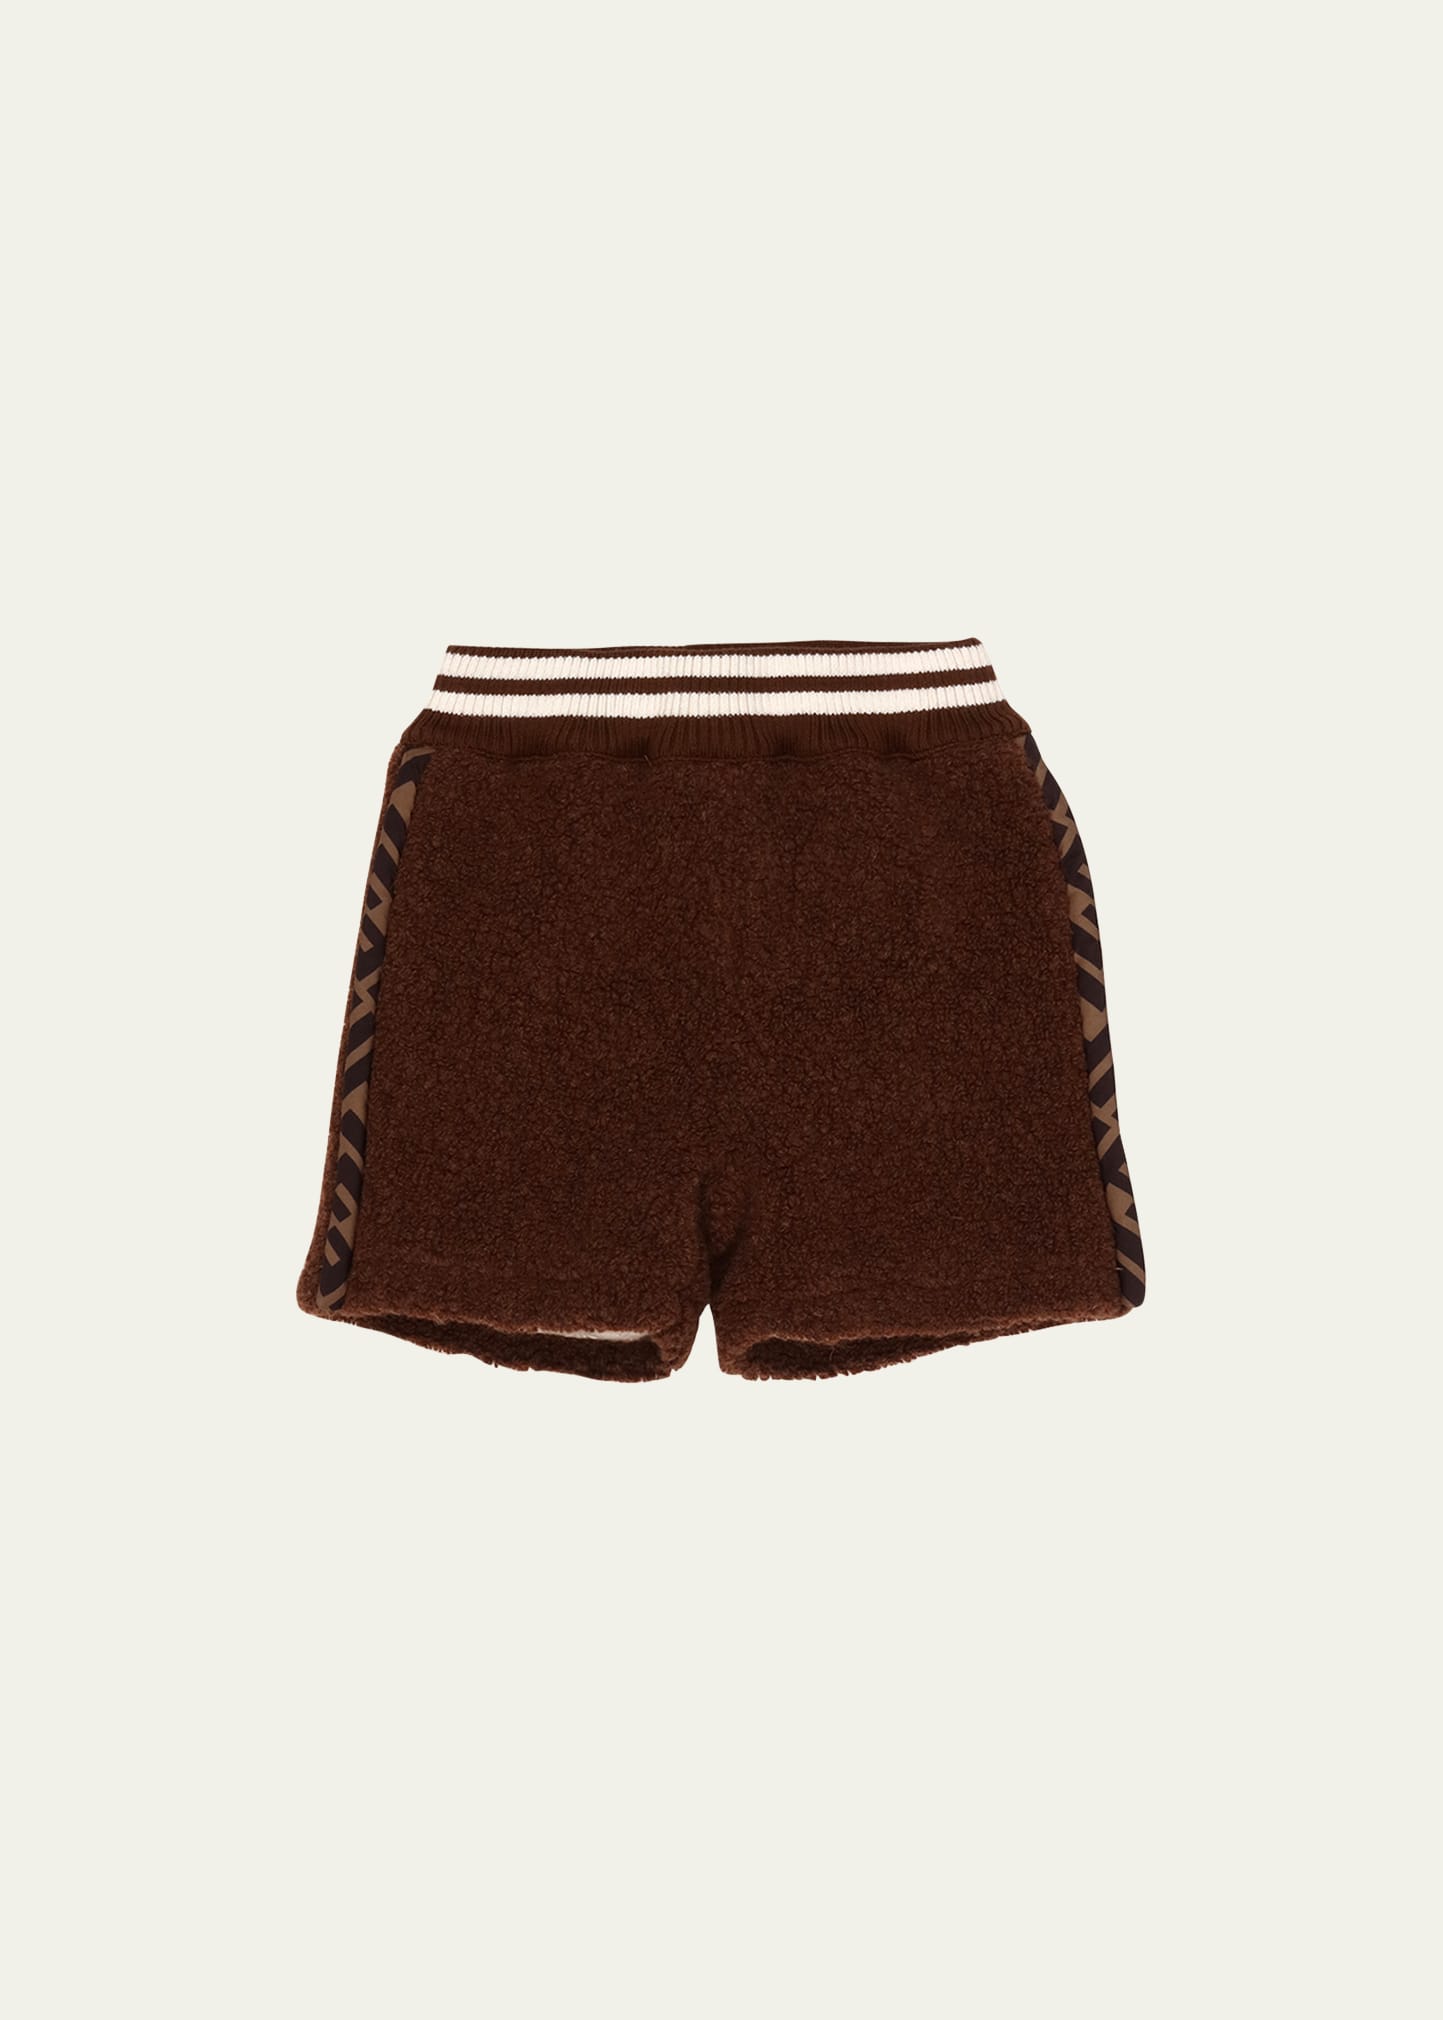 Fendi Kid's Logo Bermuda Shorts, Size 6-24 Months